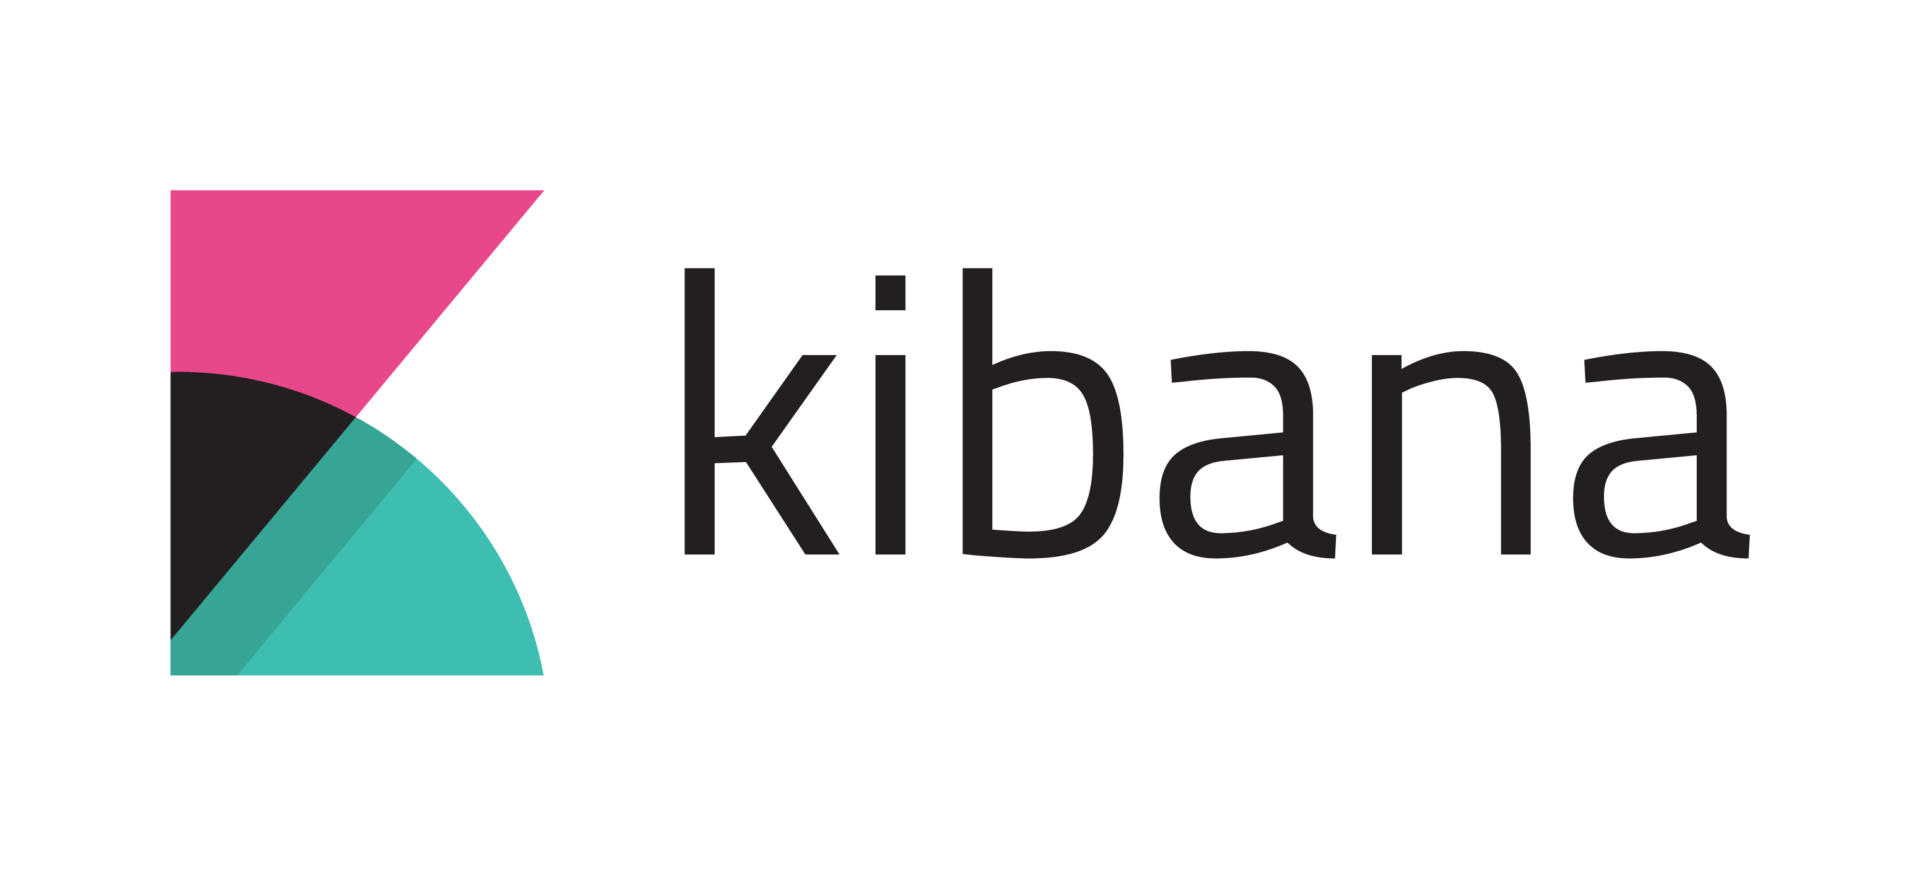 kibana